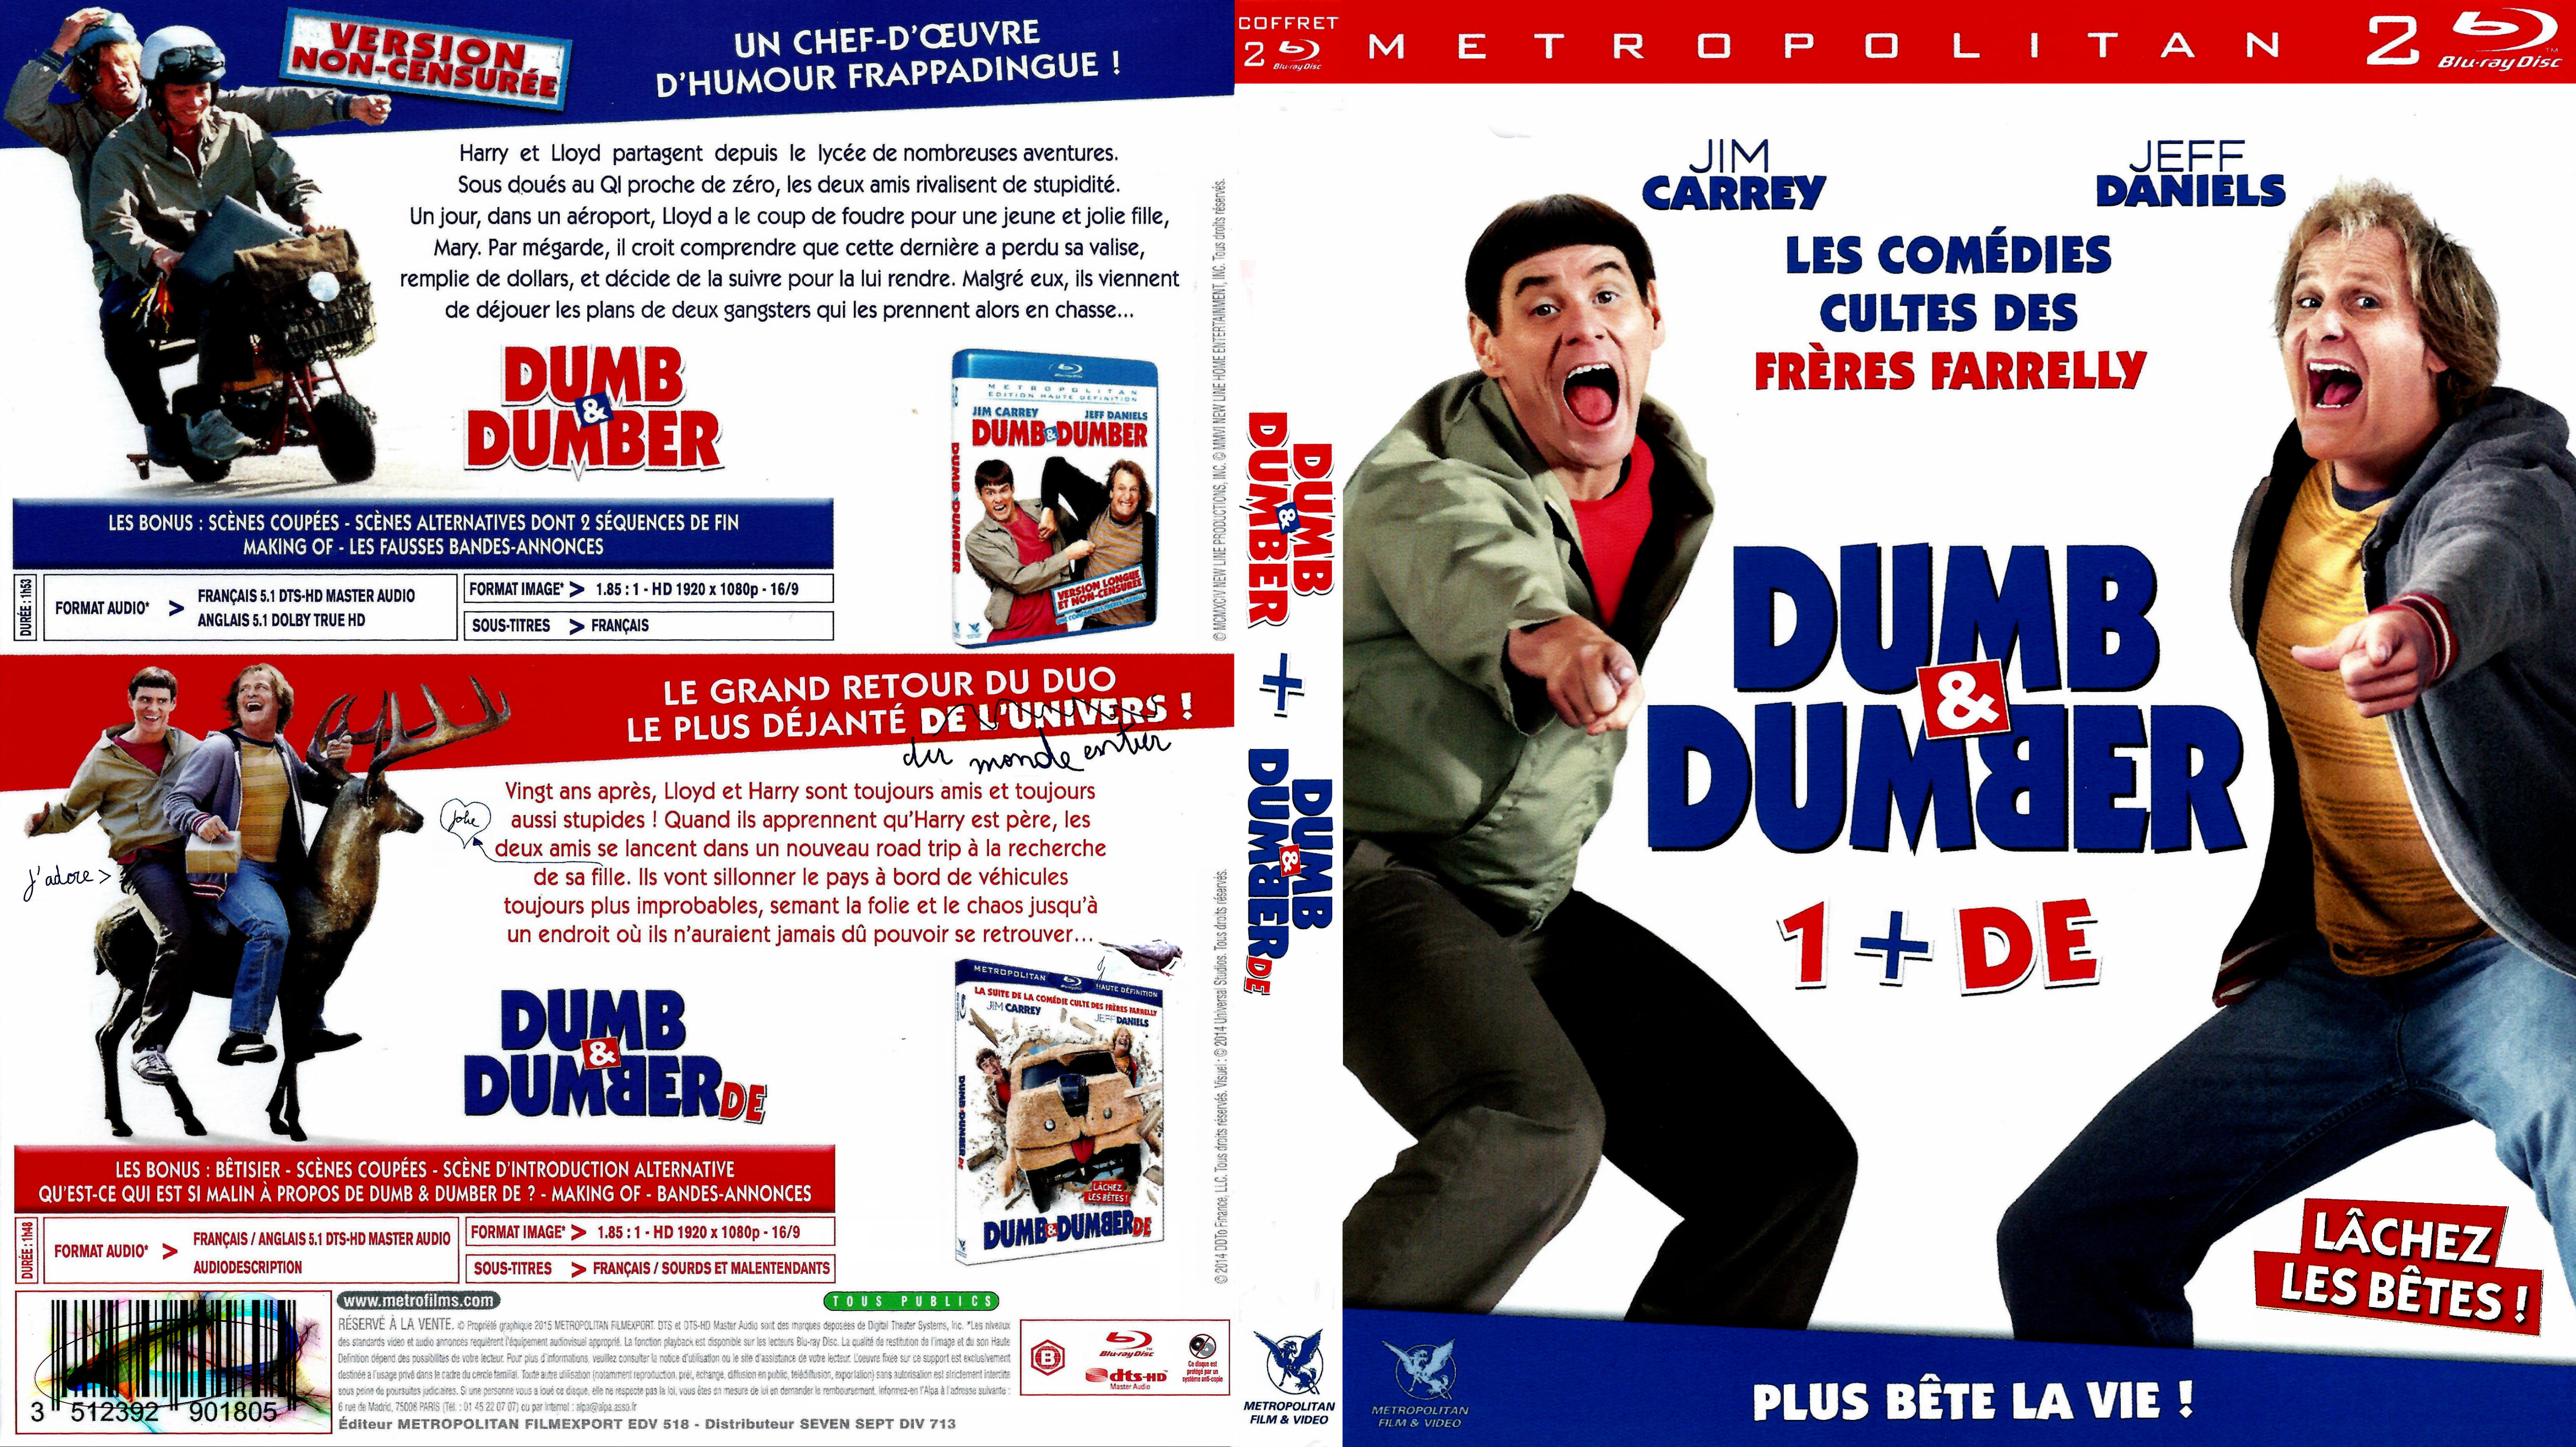 Jaquette DVD Dumb & dumber 1 & 2 COFFRET (BLU-RAY) 